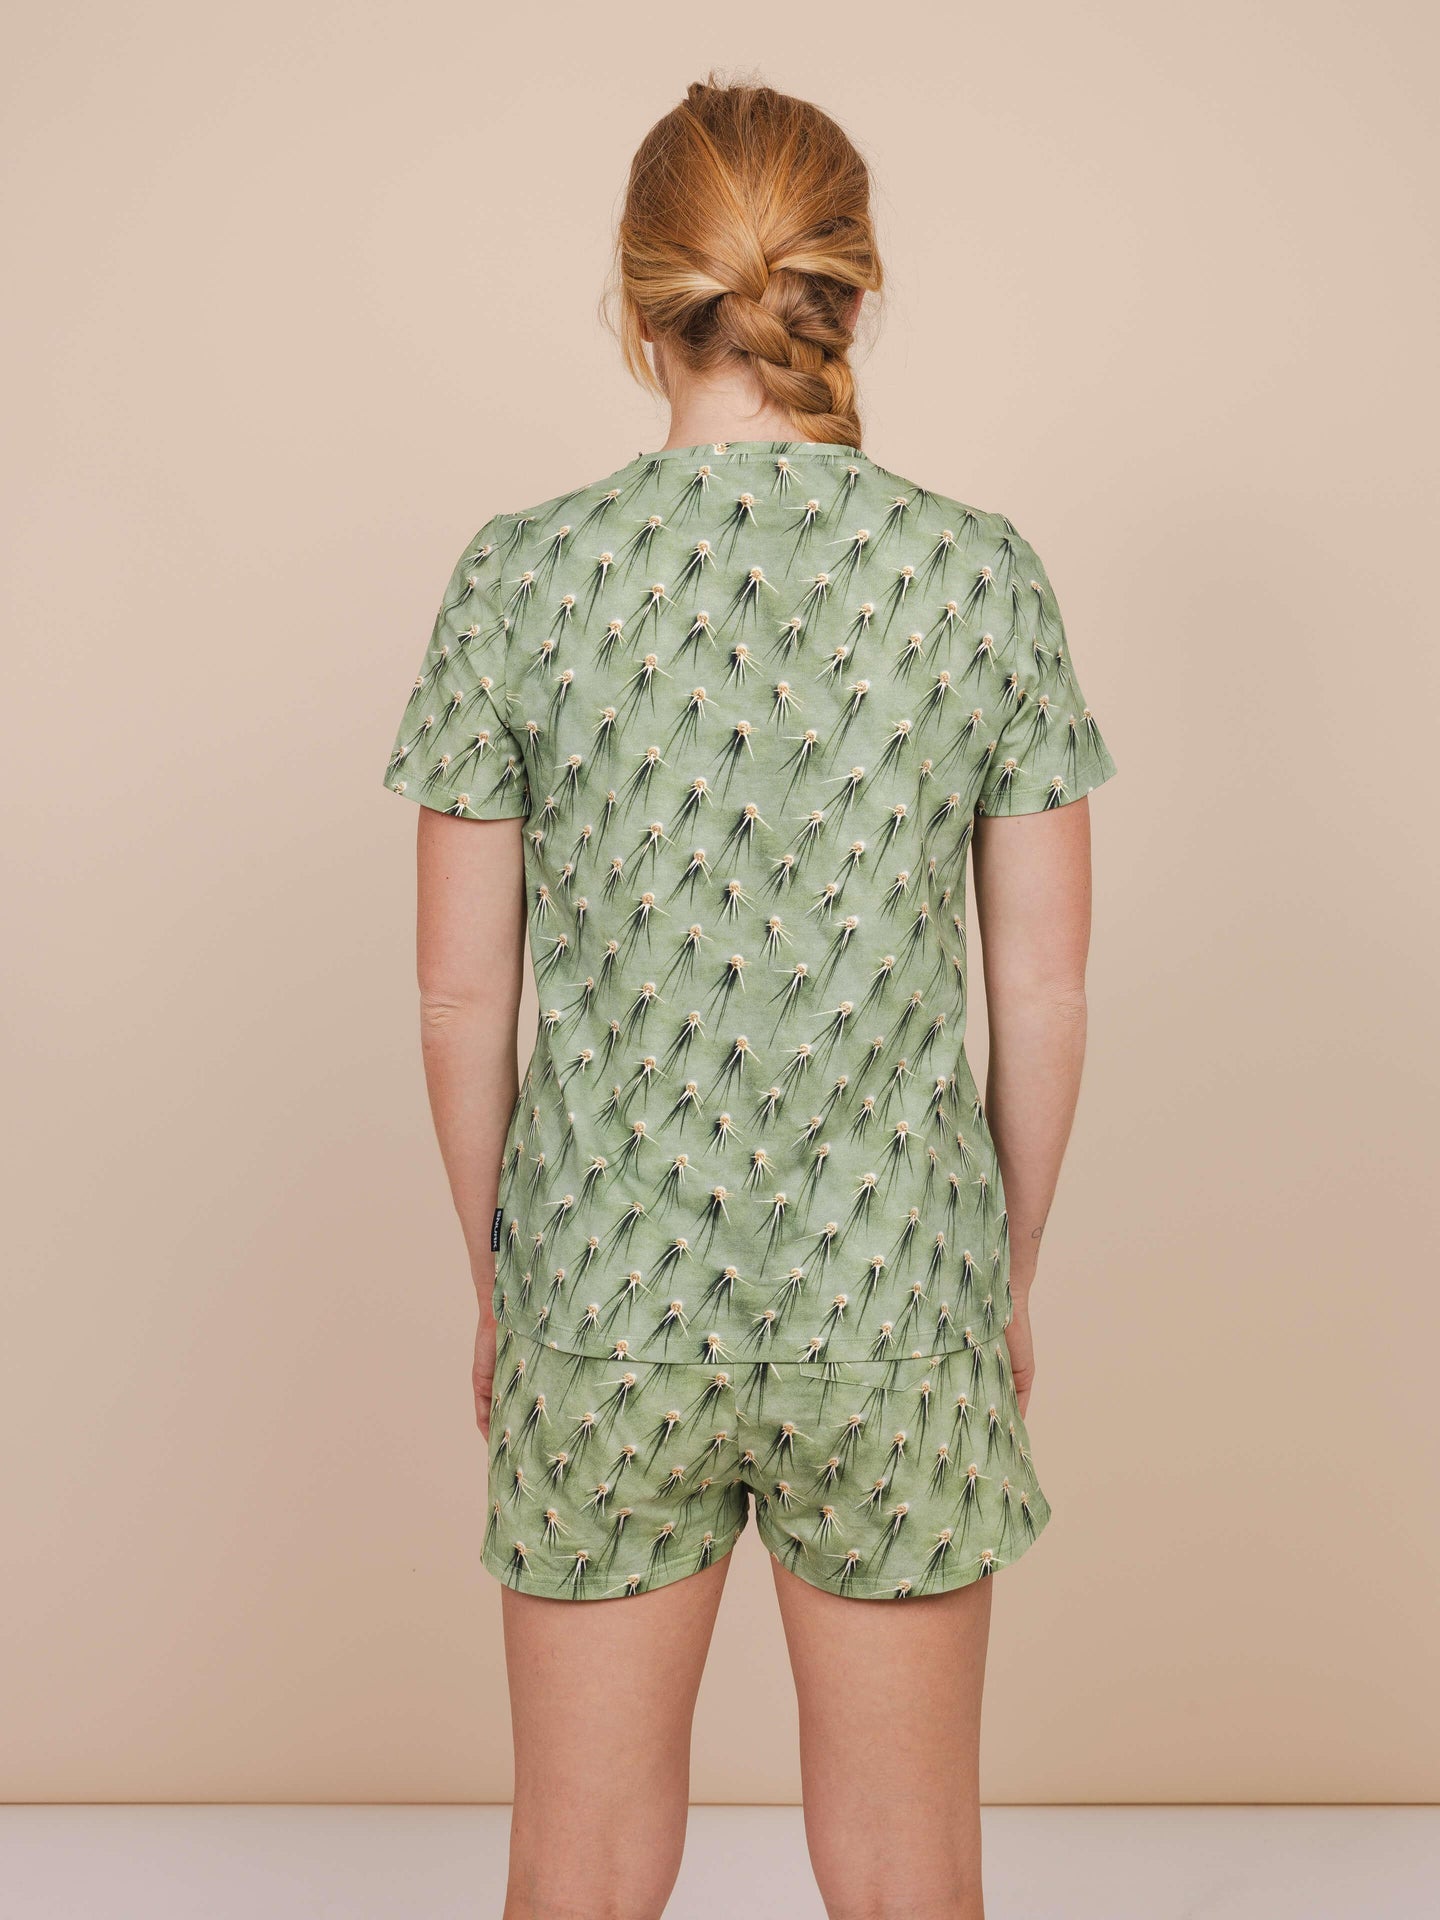 Cozy Cactus V-neck T-shirt en Korte Broek set Dames - SNURK